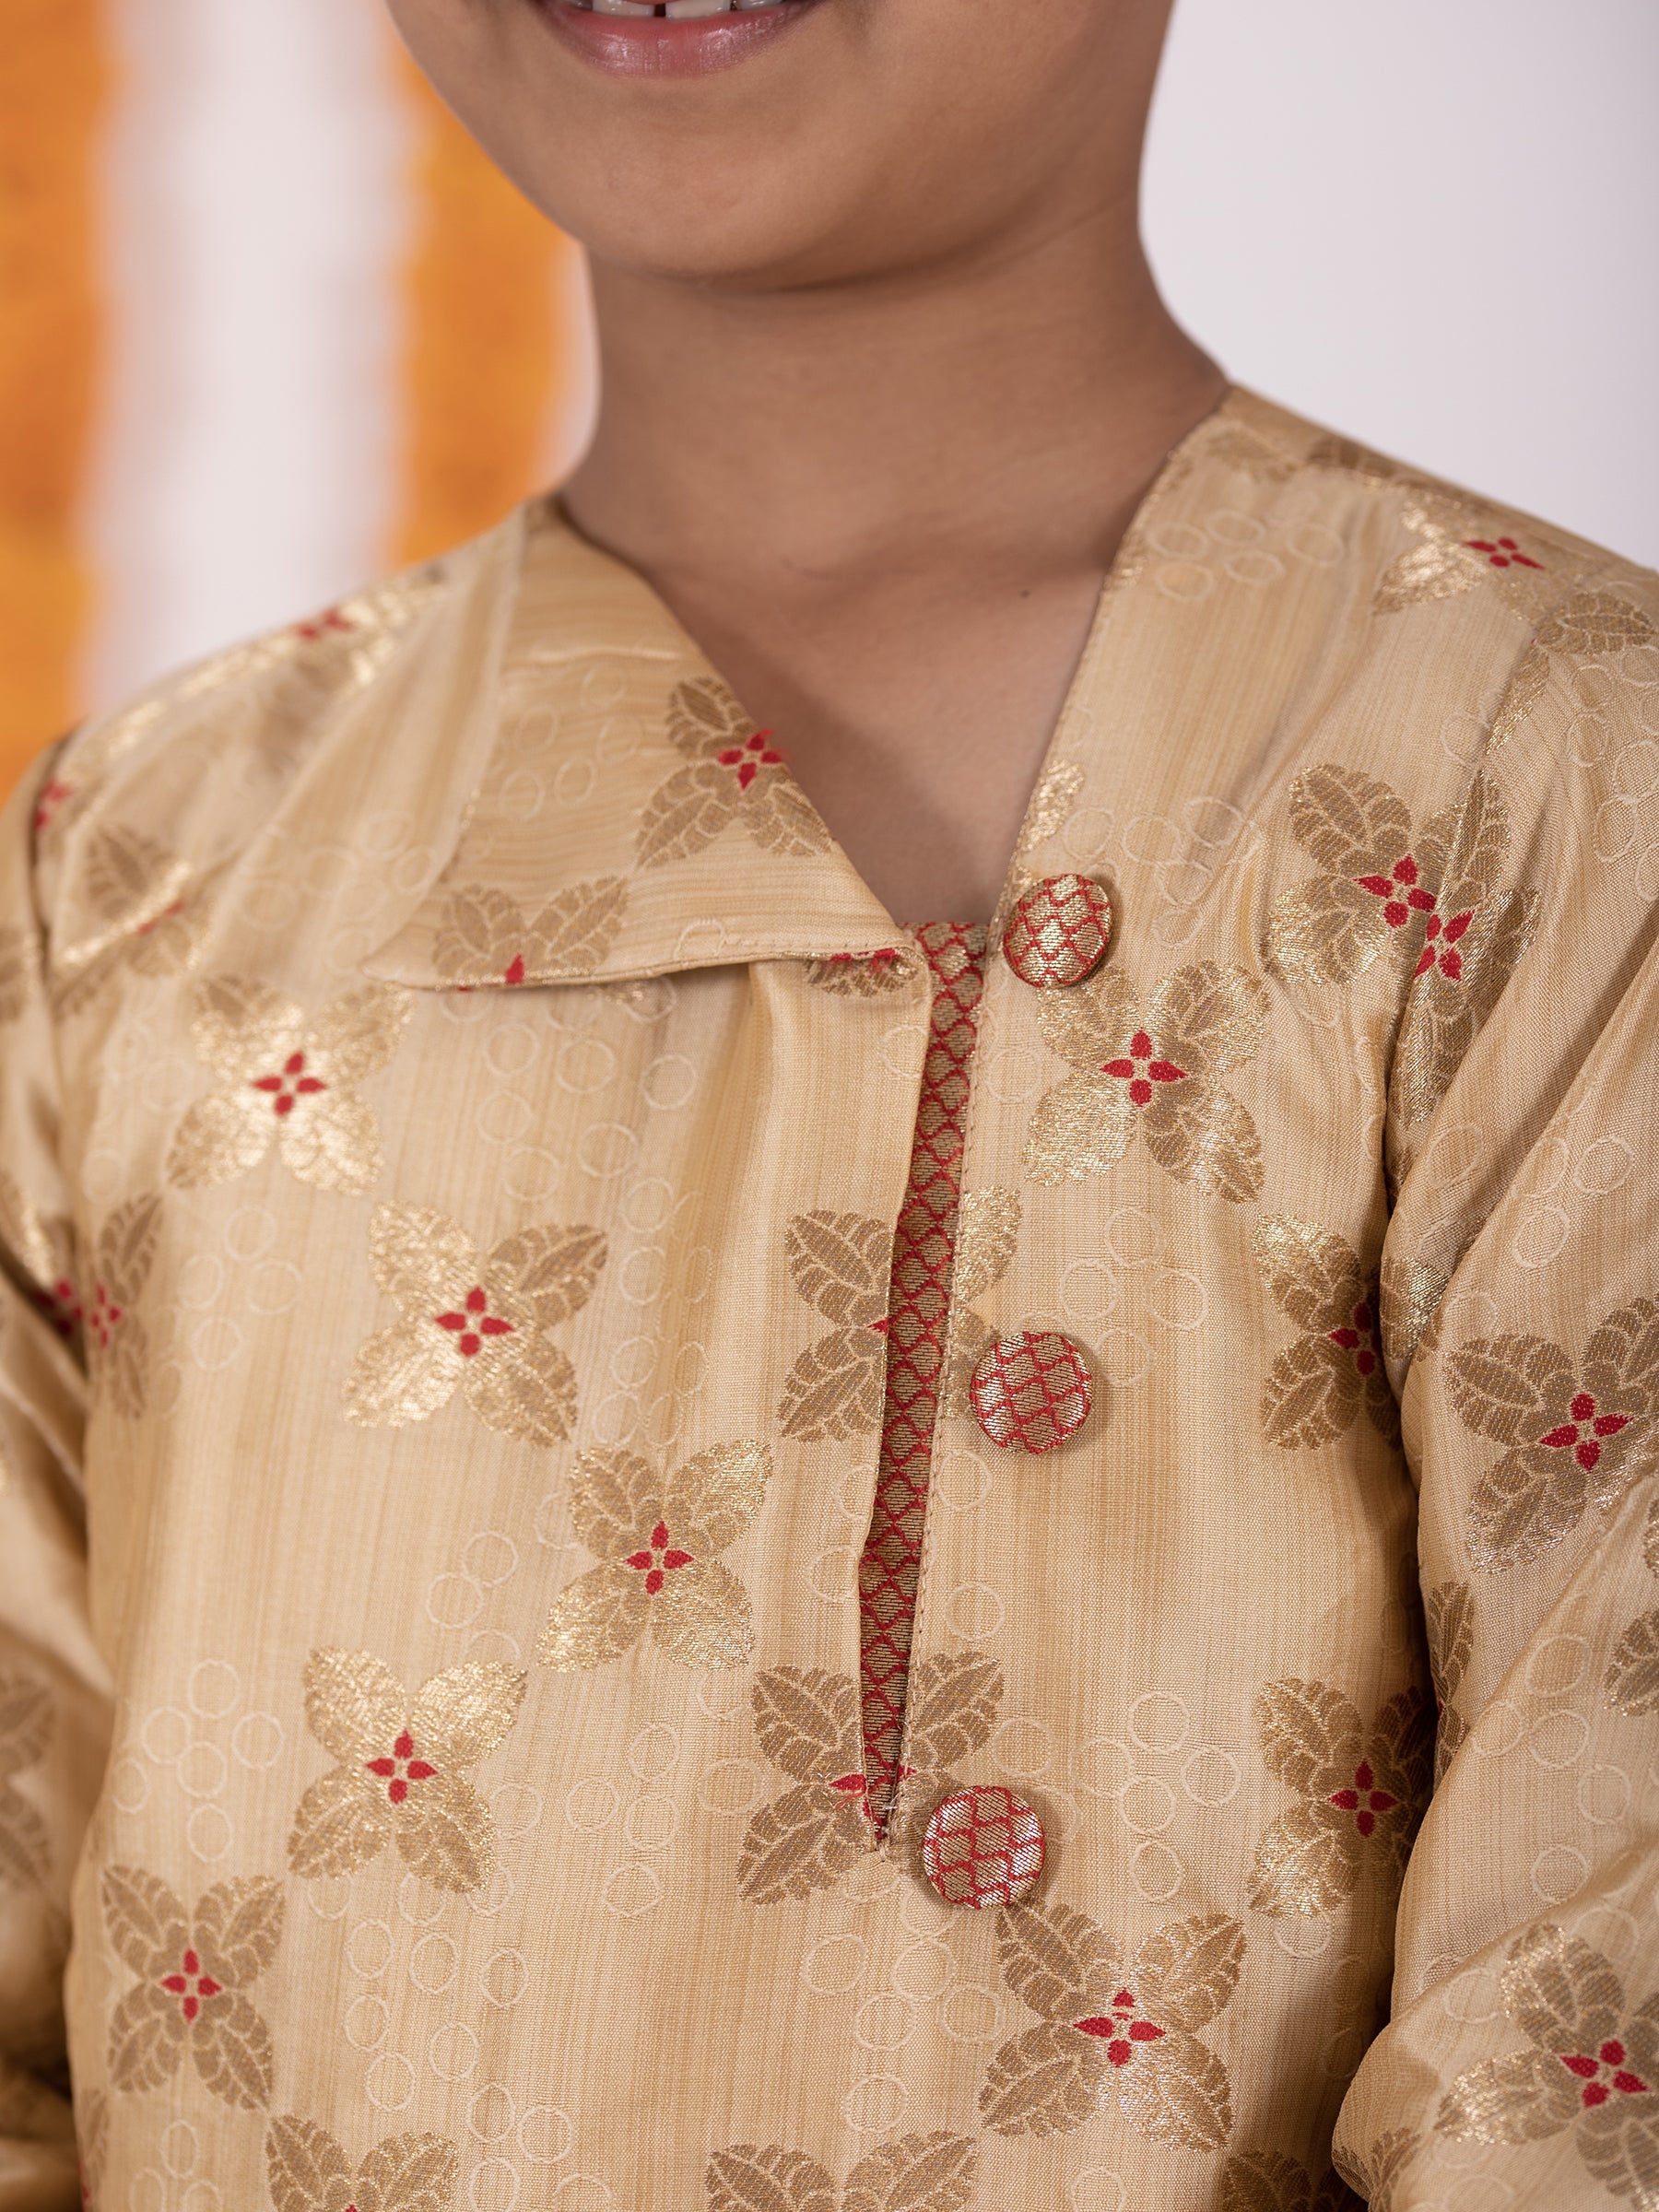 Golden beige banarasi brocade traditional ethnic brocade printed silk cotton kurta pyjama salwar suit pajama churidar set sherwani jacket for baby boy kids 